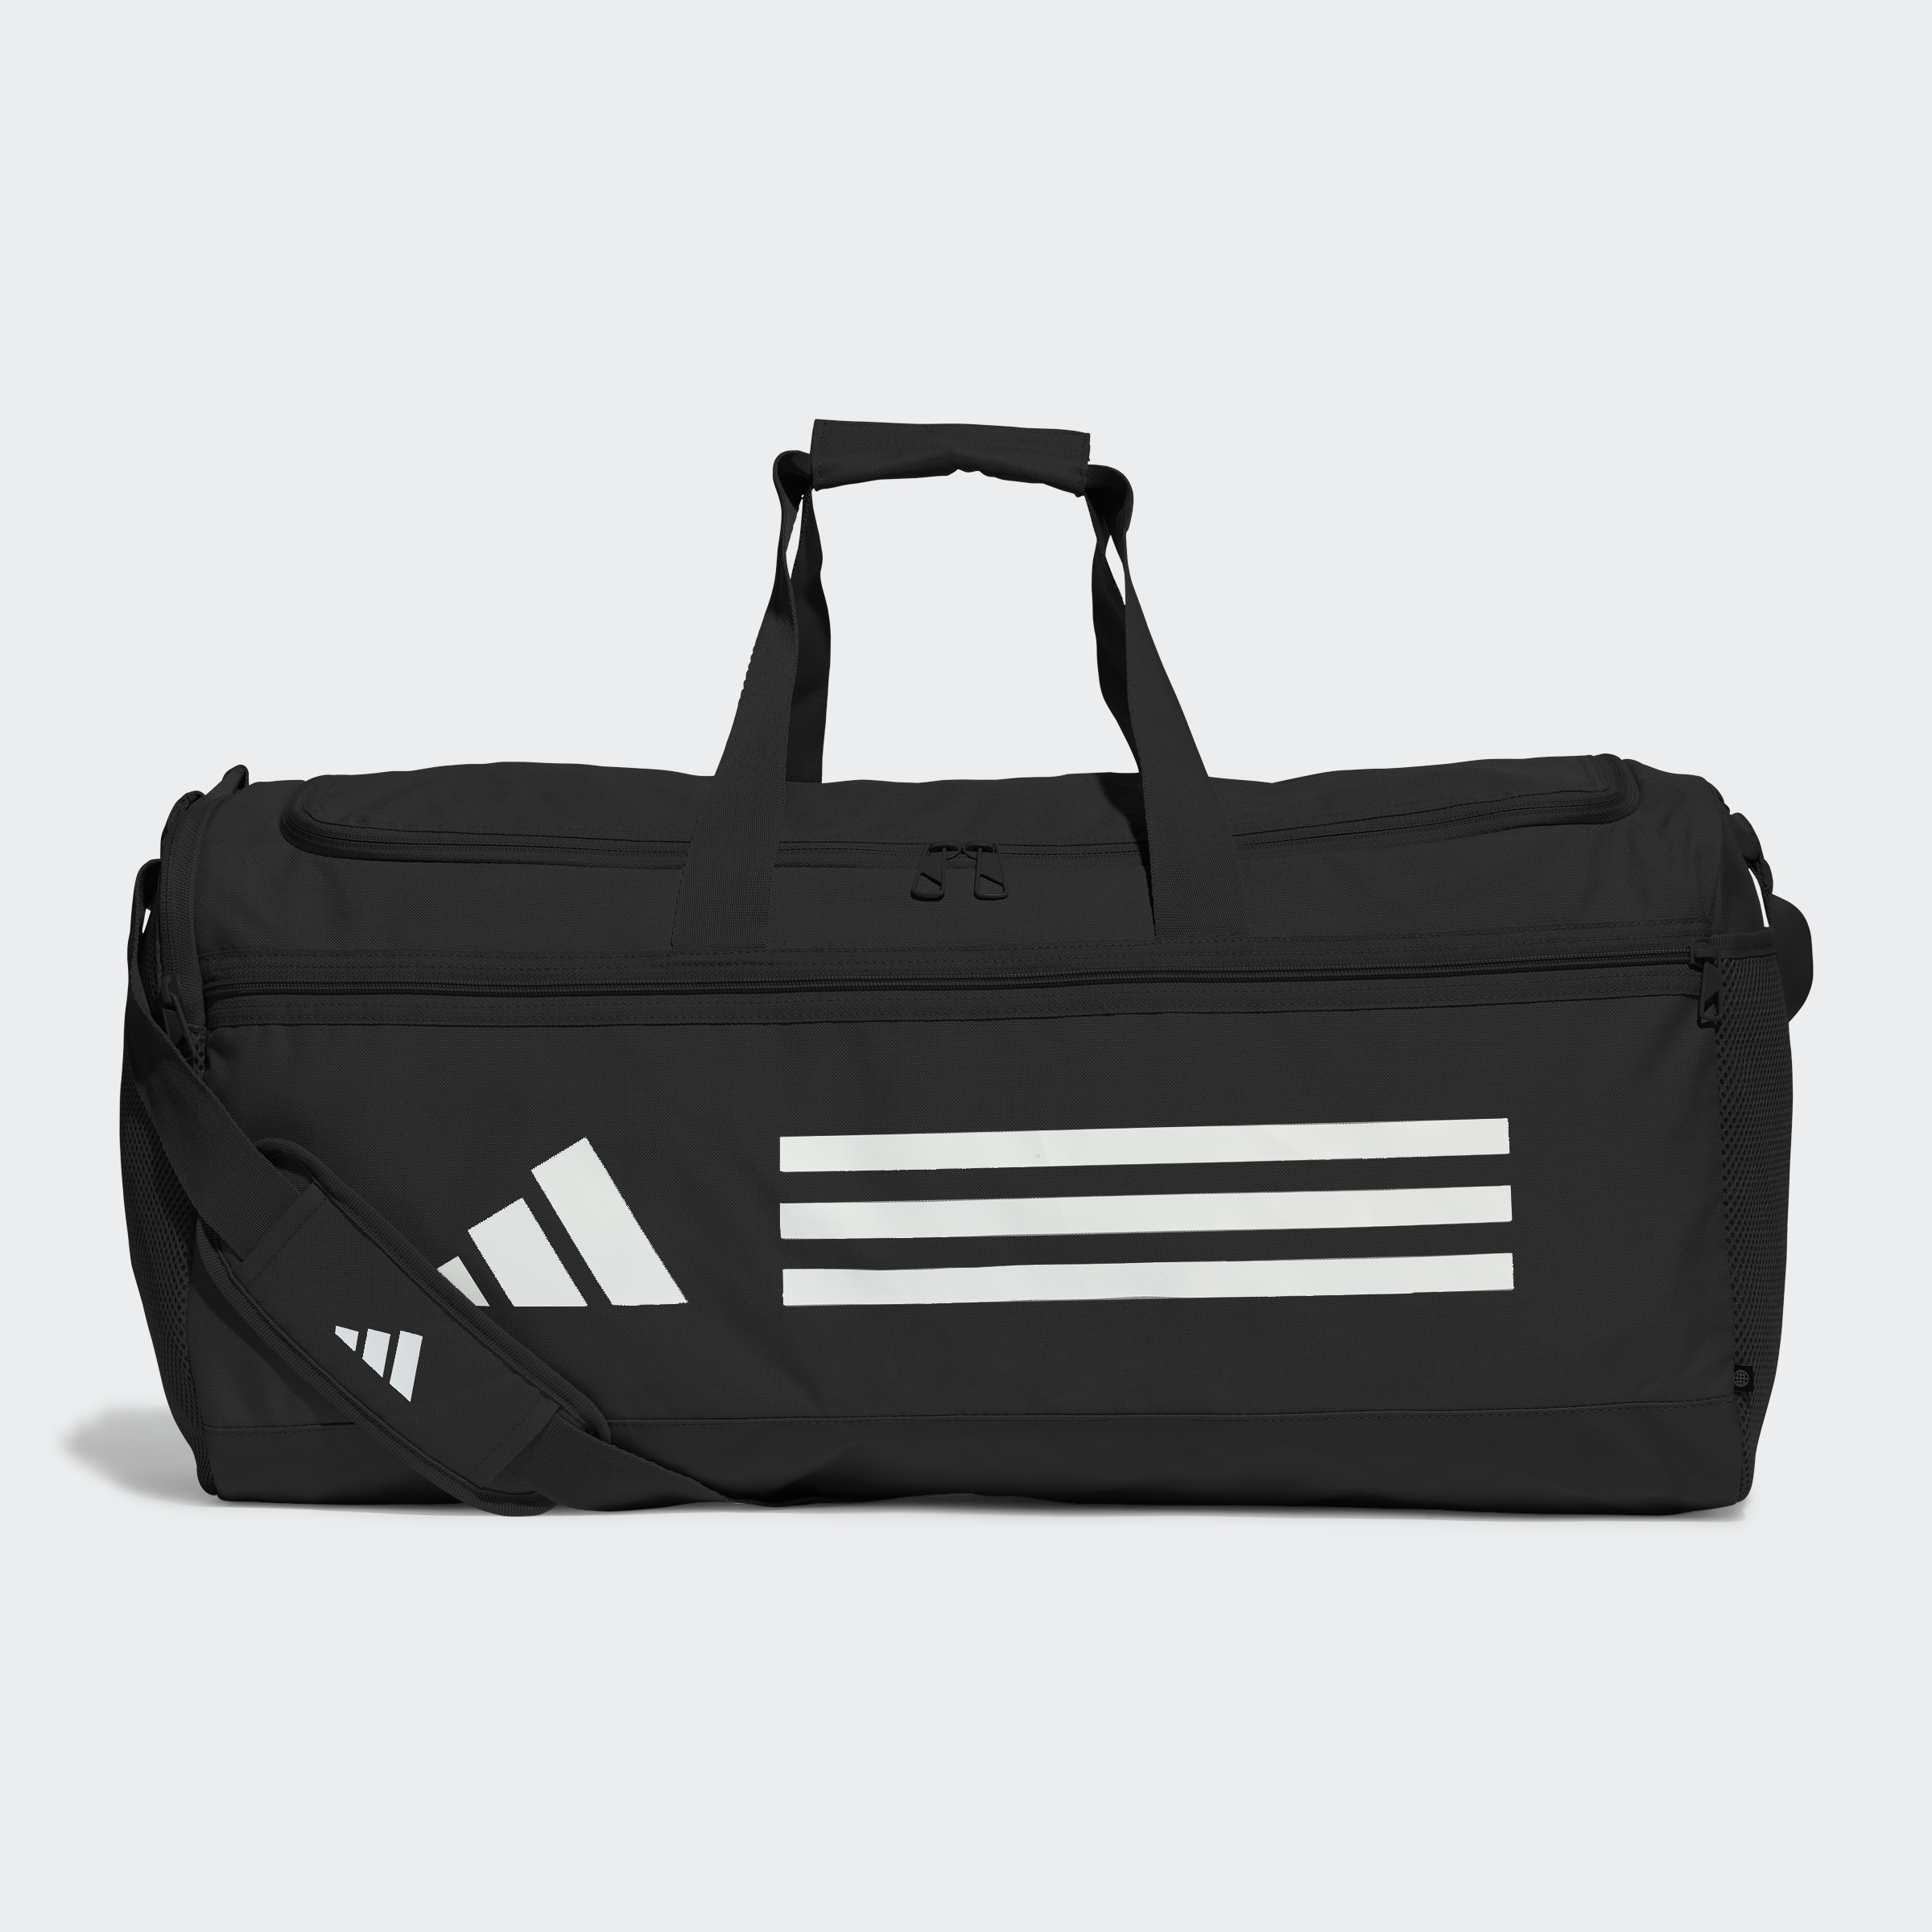 Backpack adidas Parkhood - adidas - Bags - Equipments